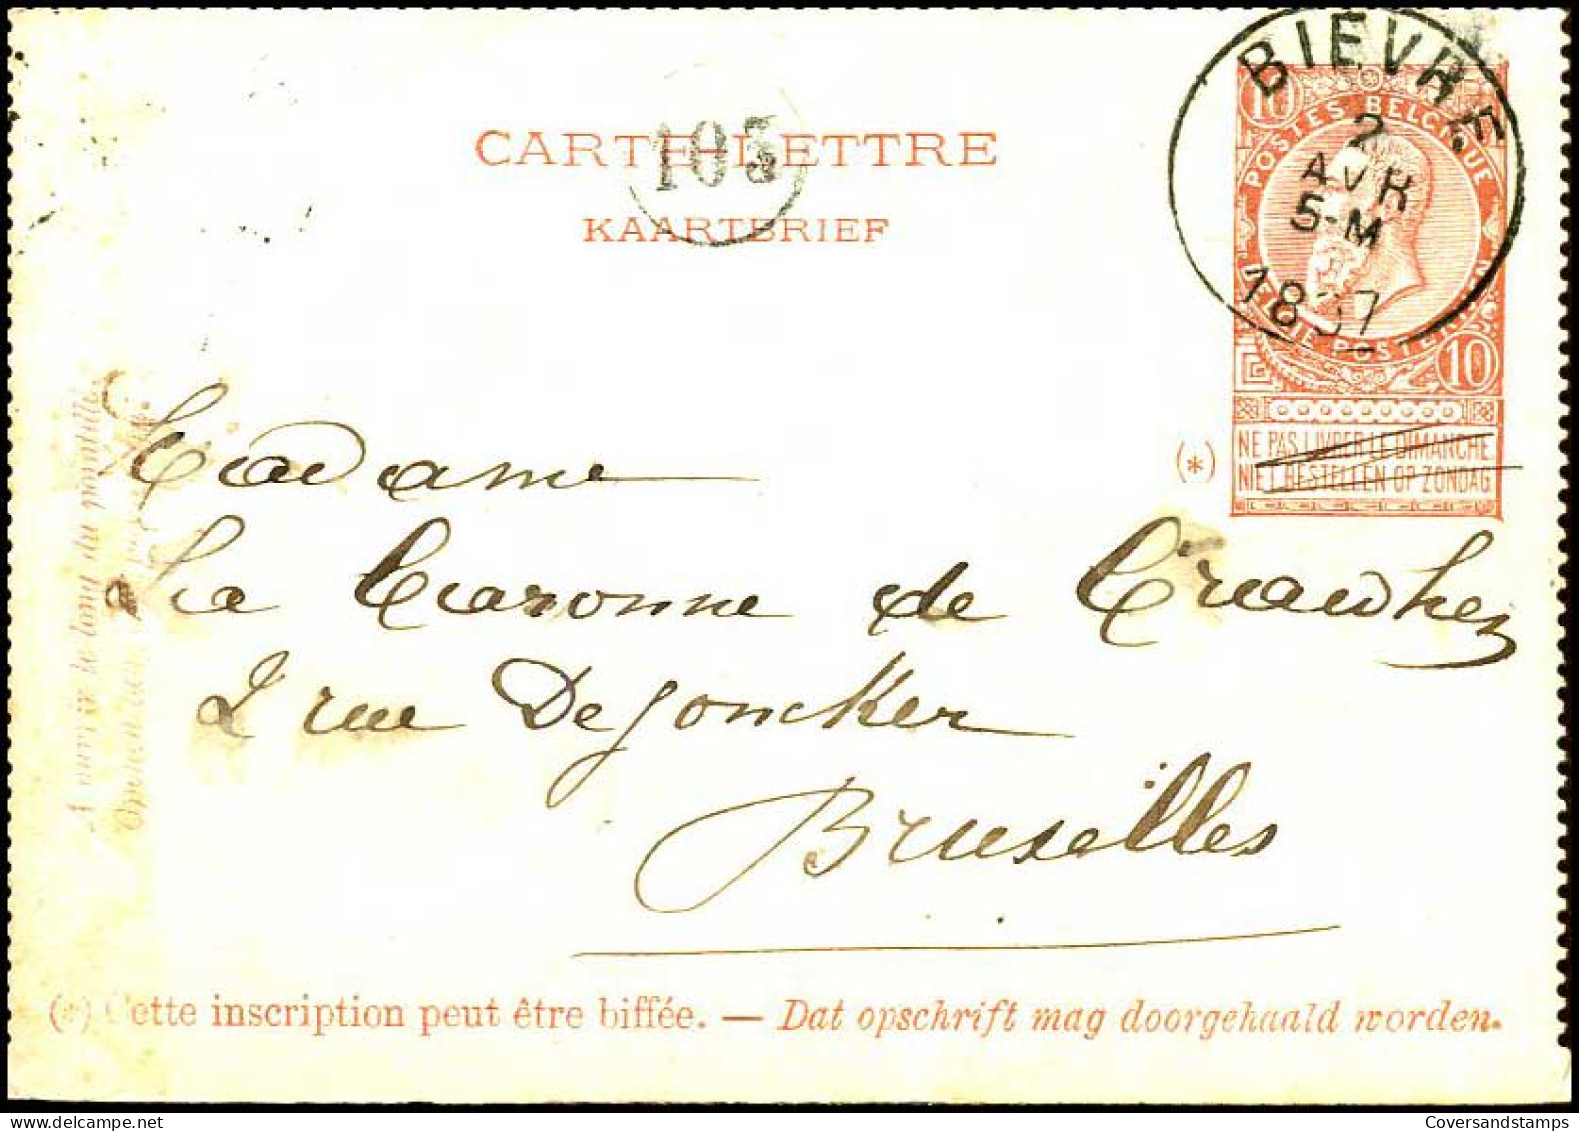 Kaartbrief / Carte-Lettre Front 1897 - Letter Covers